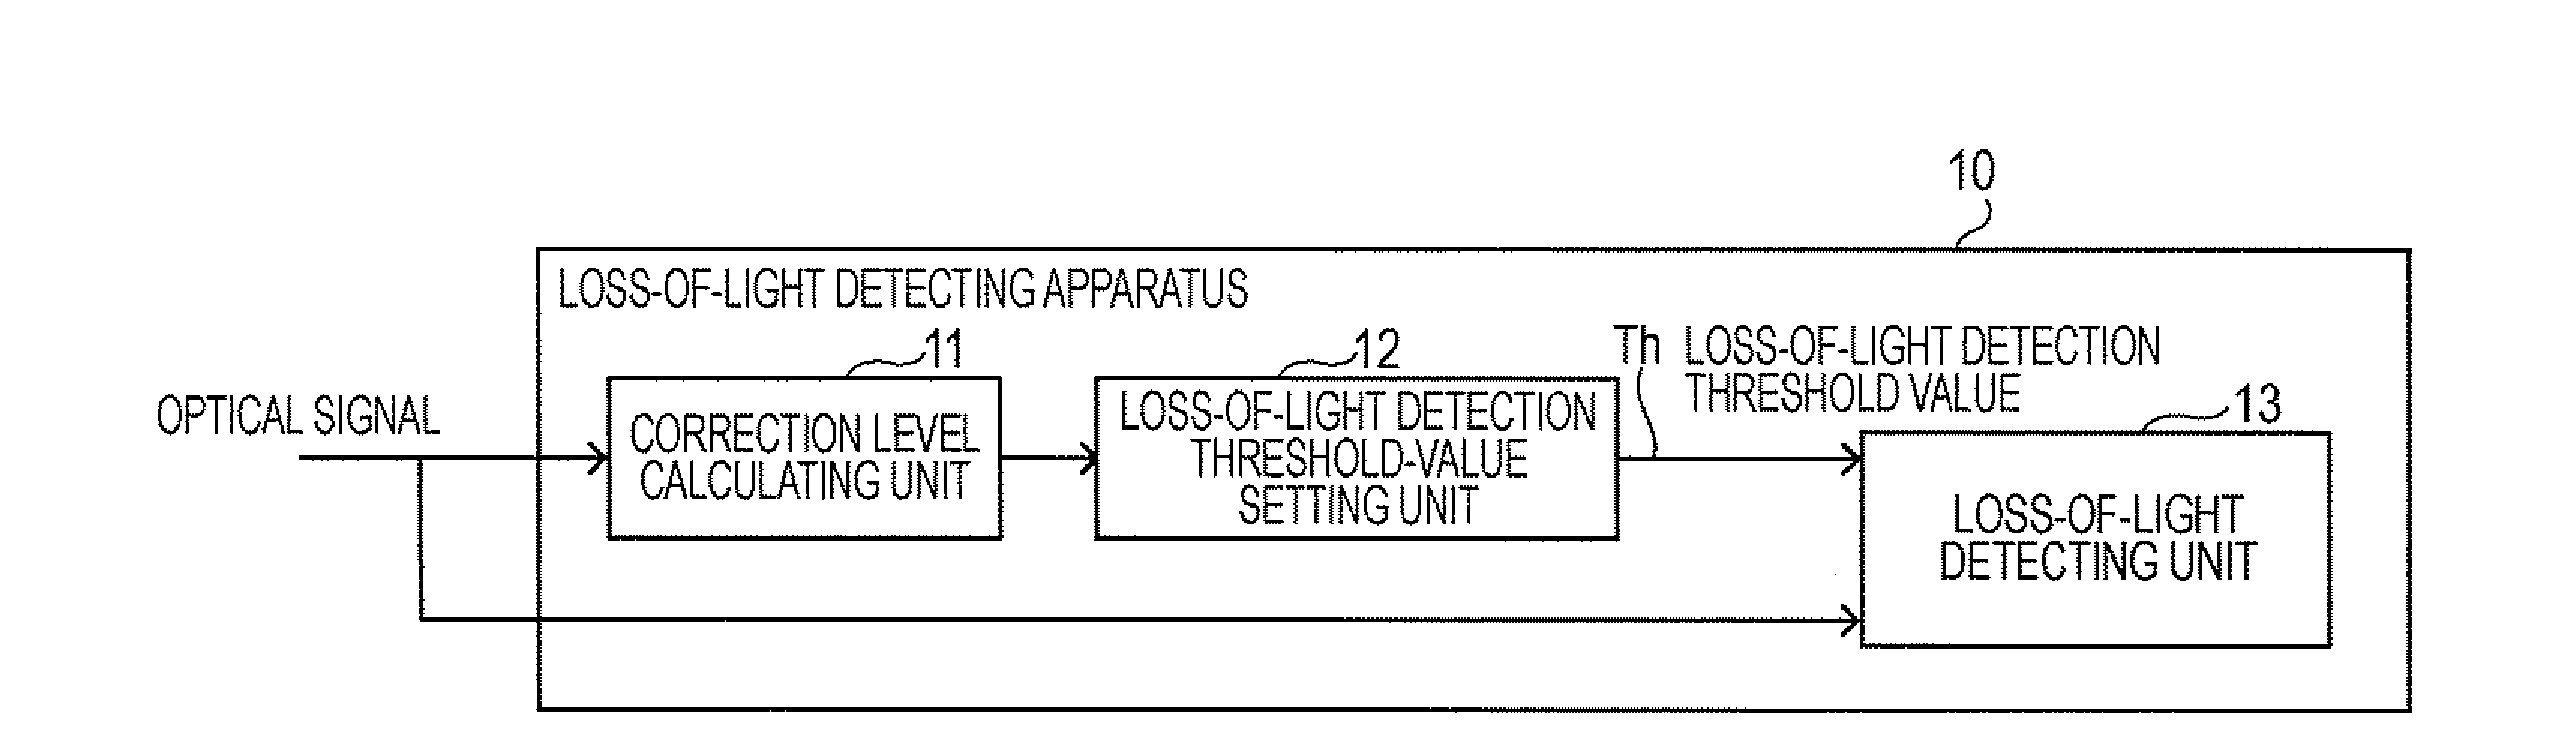 Loss-of-light detecting apparatus